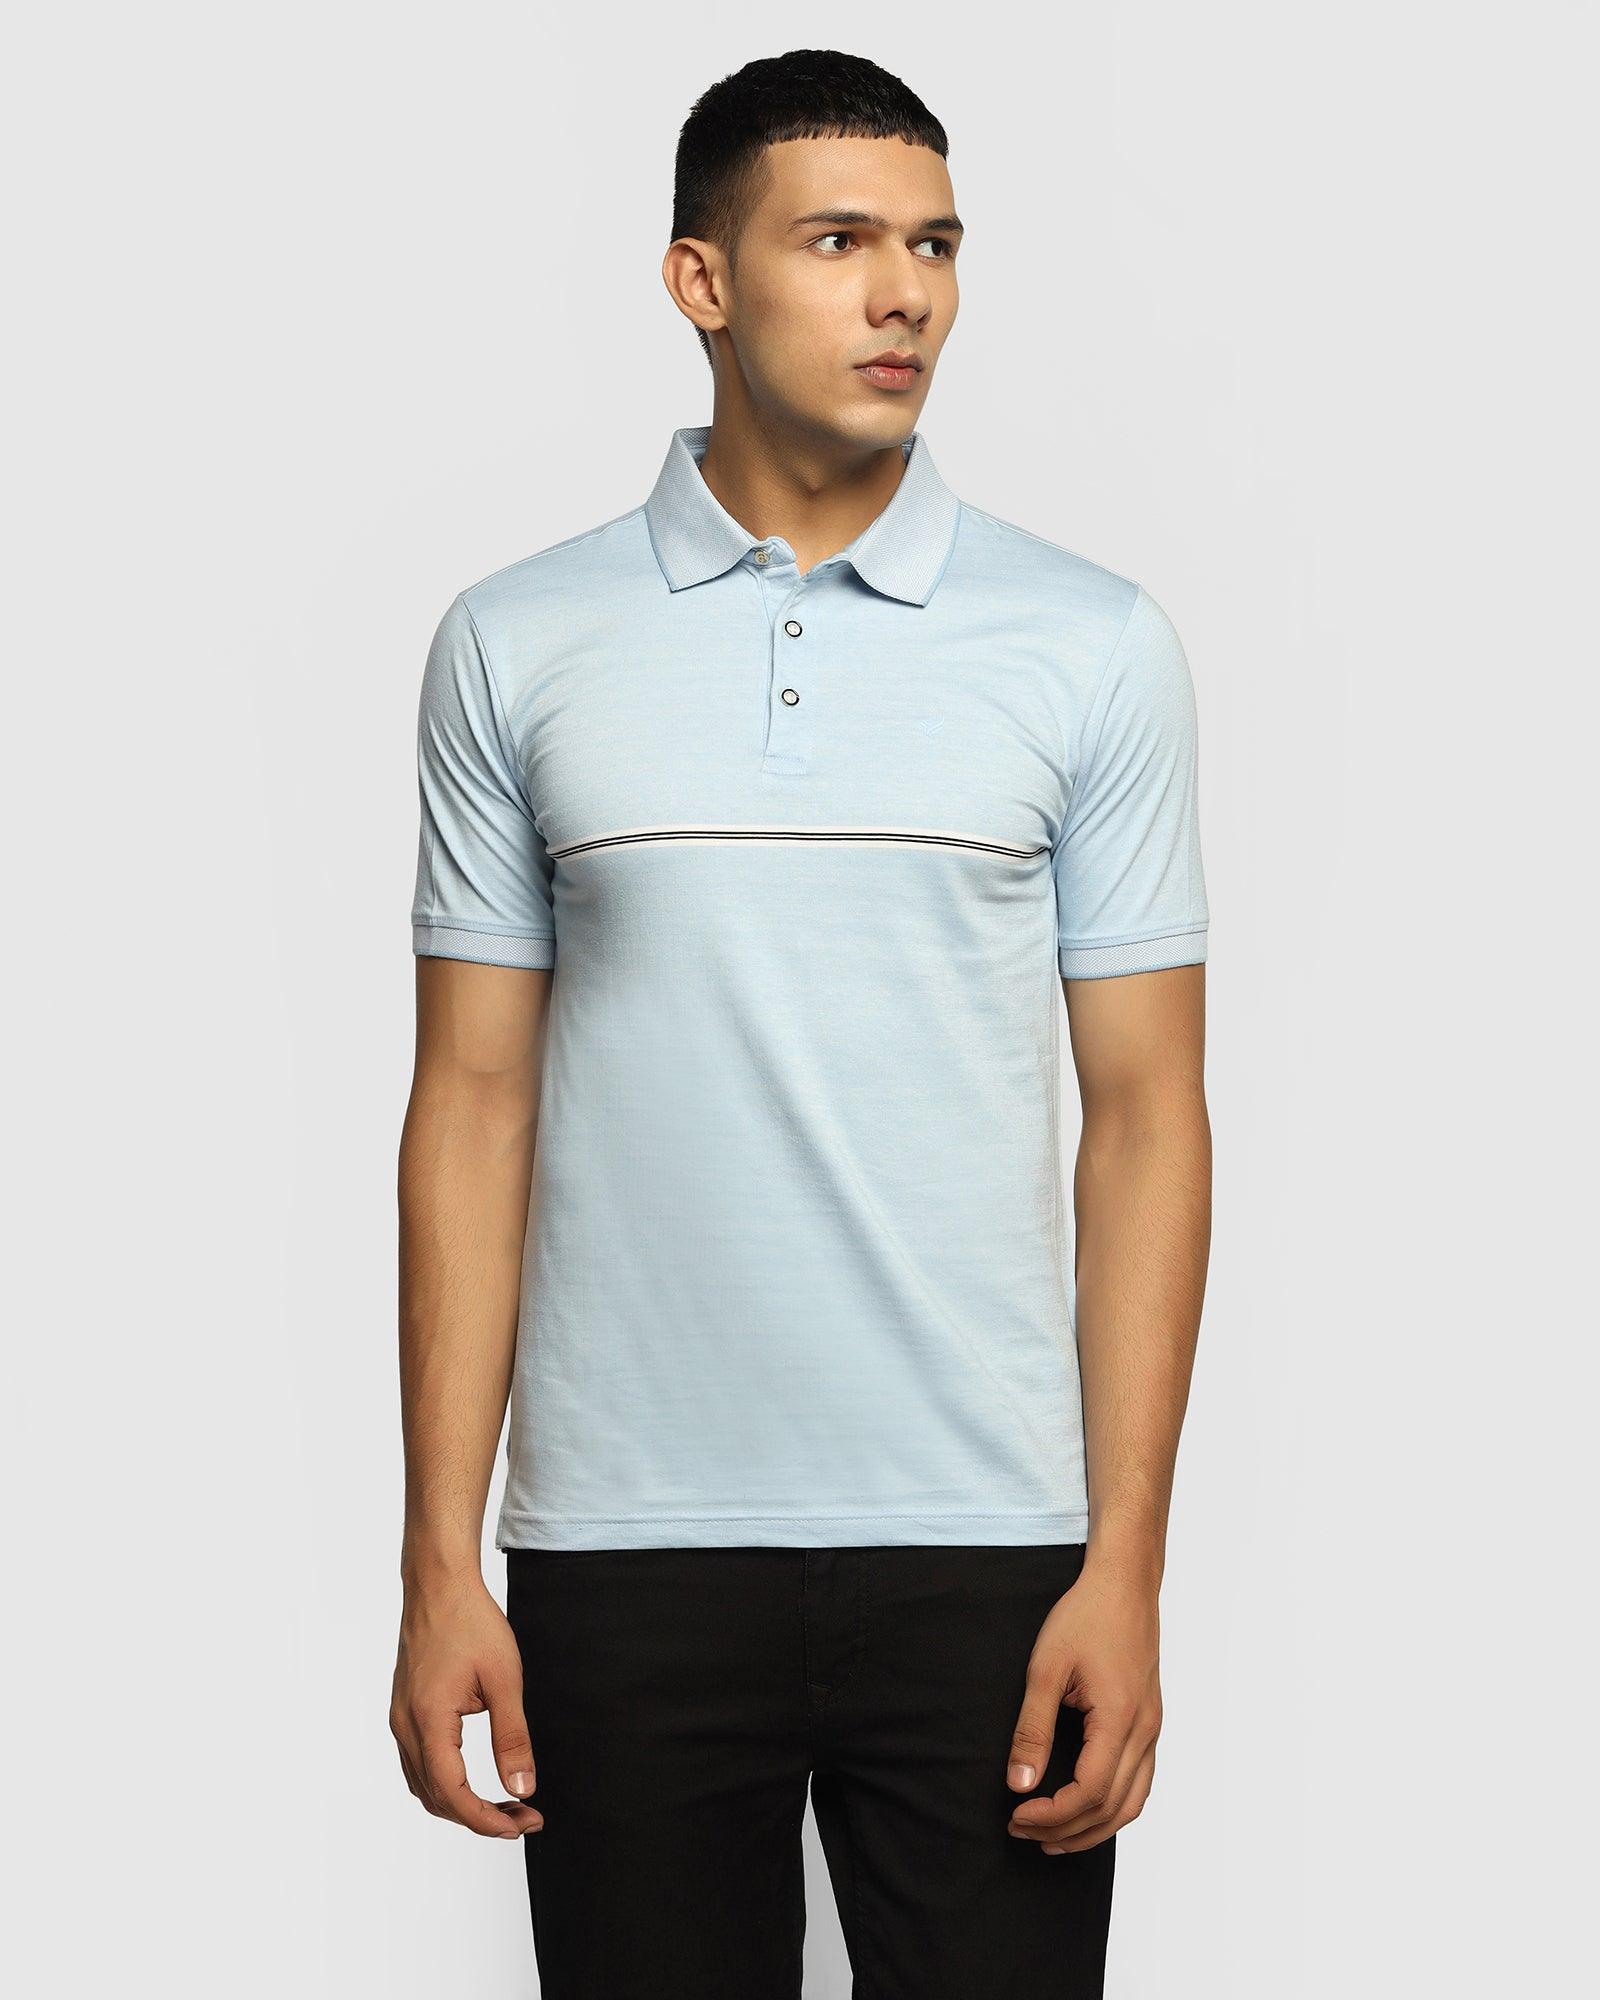 Polo Powder Blue Striped T Shirt - Austin